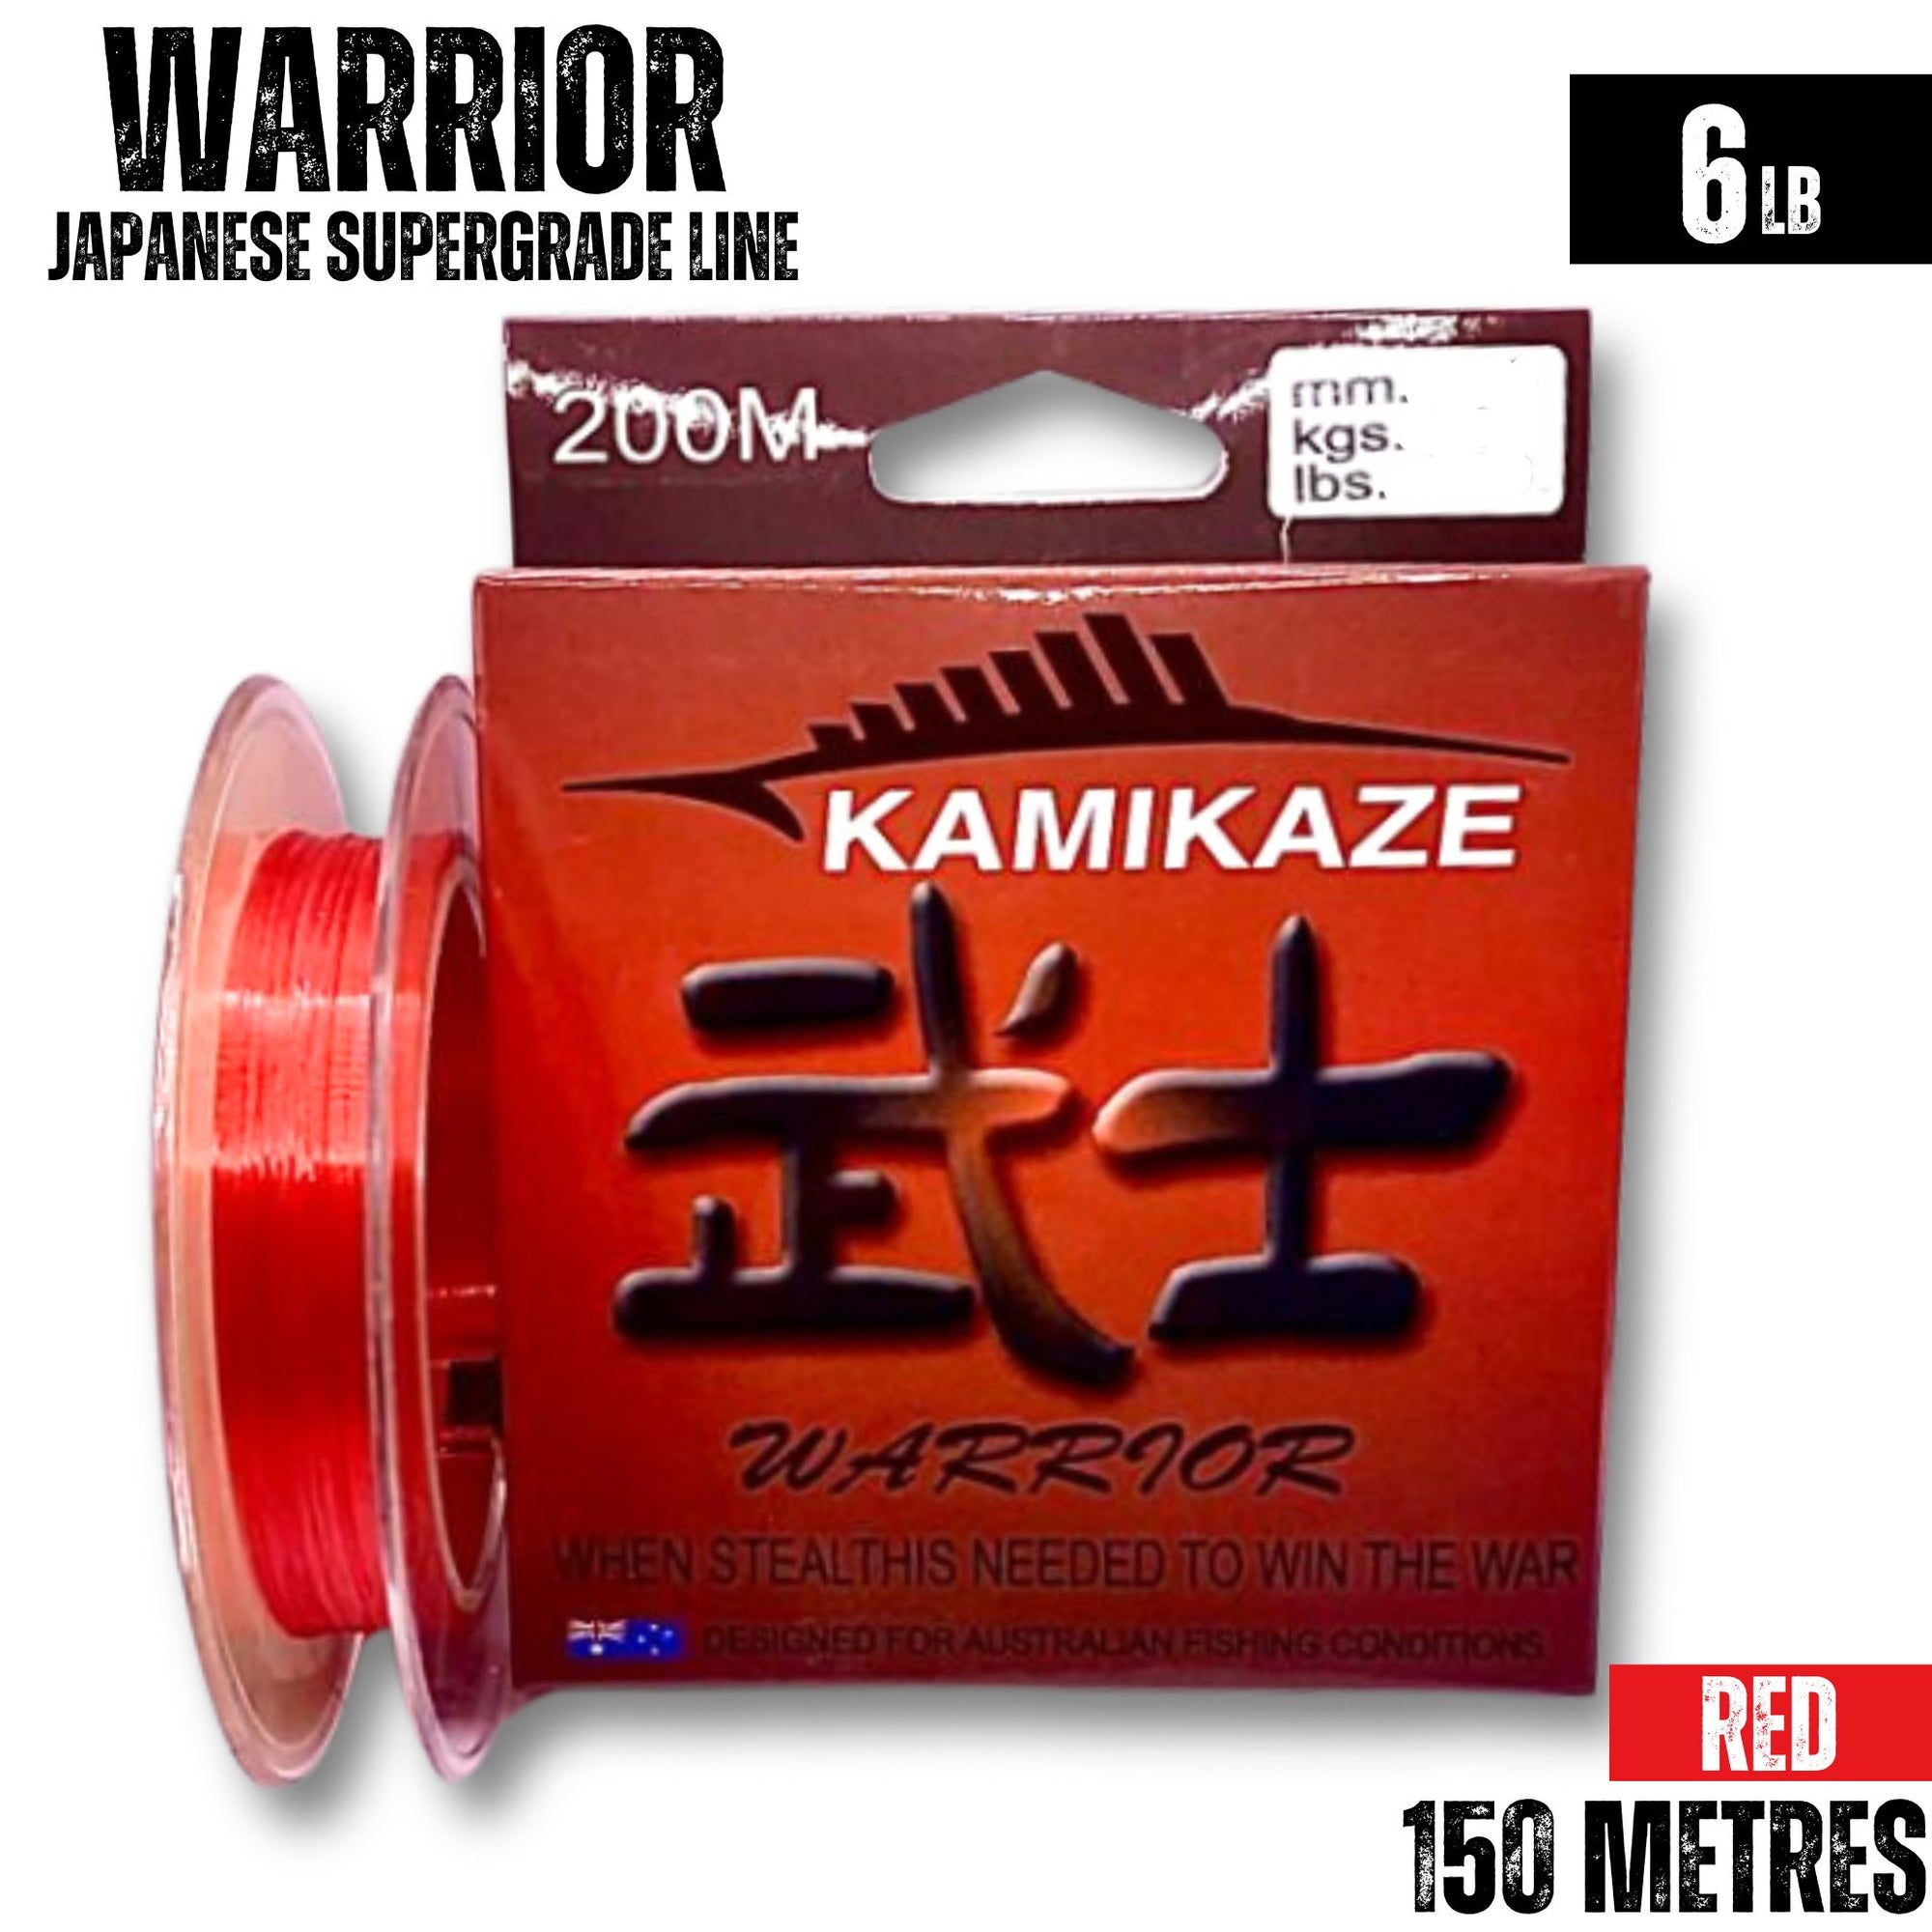 Kamikaze WARRIOR Japanese SuperGradeLine 150m 6lb RED - South East Clearance Centre